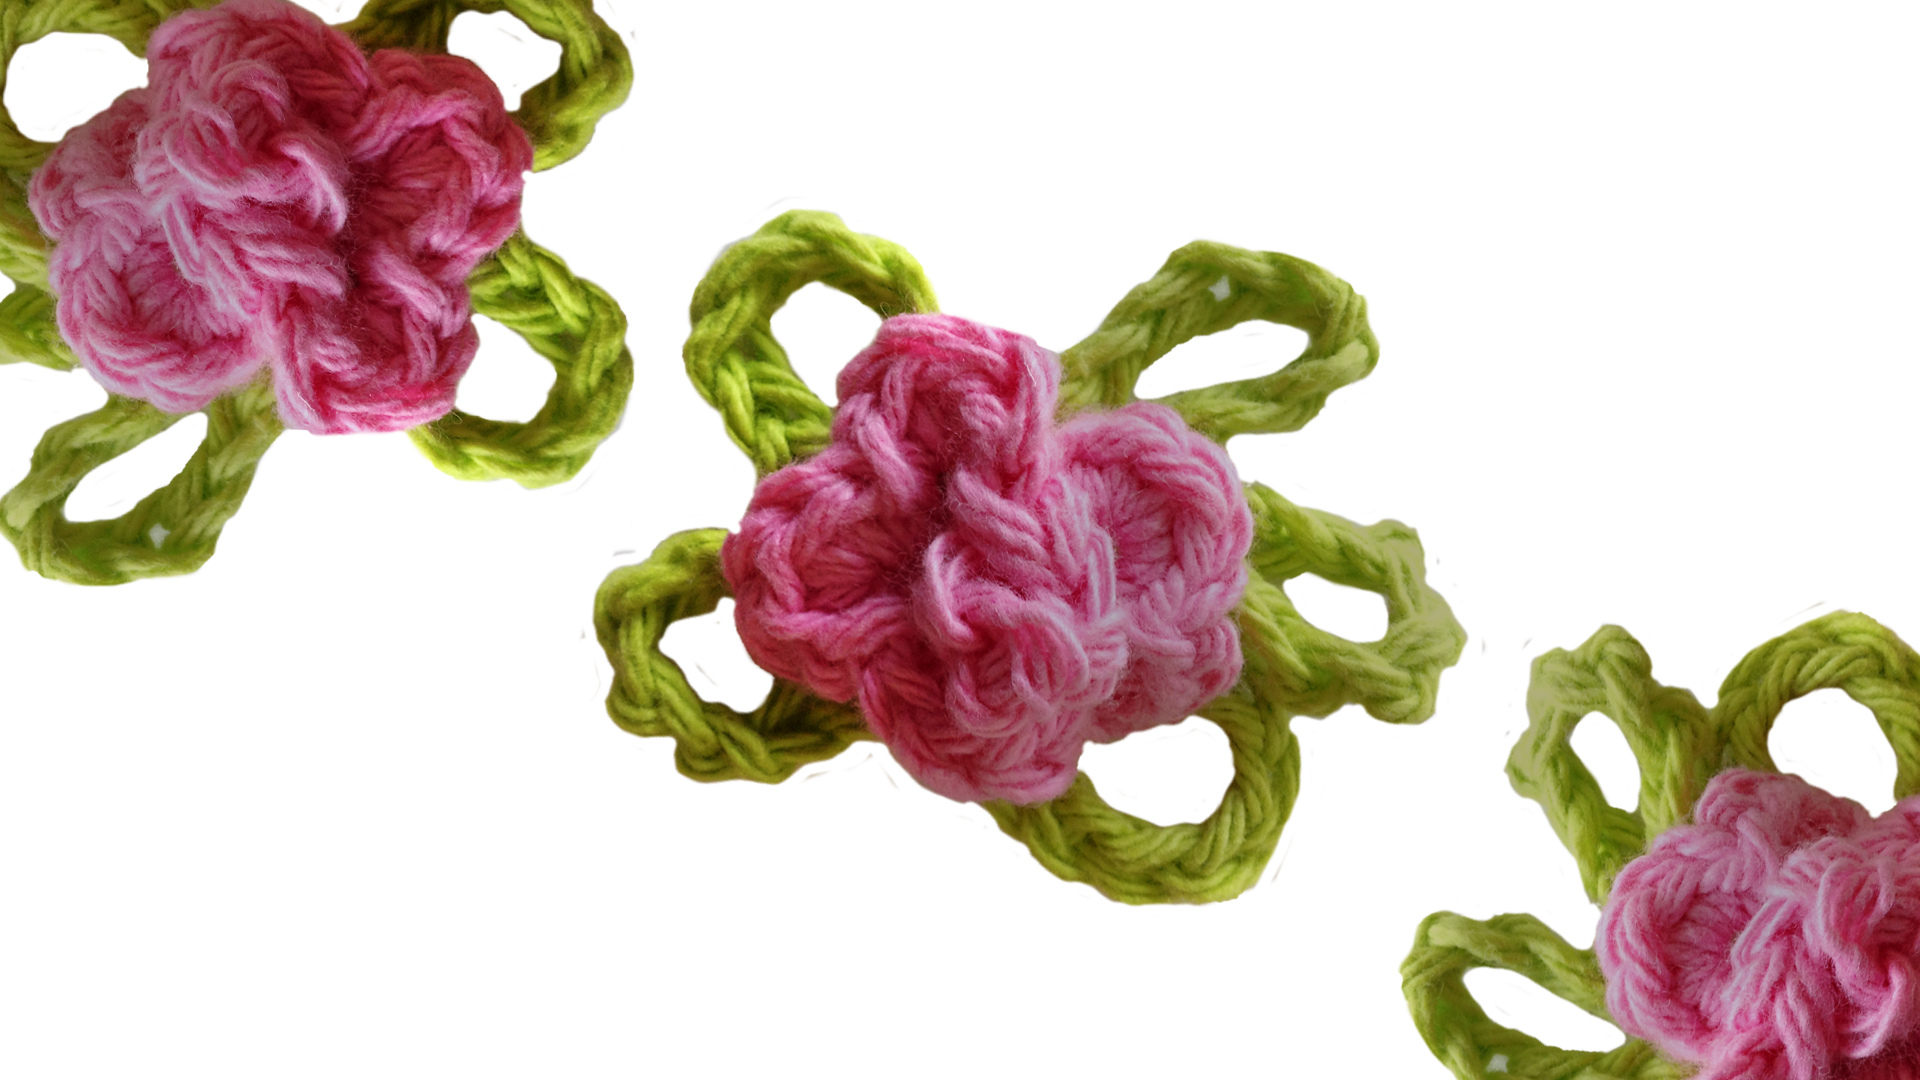 maggies-crochet-mini-rose-free-pattern-close-up